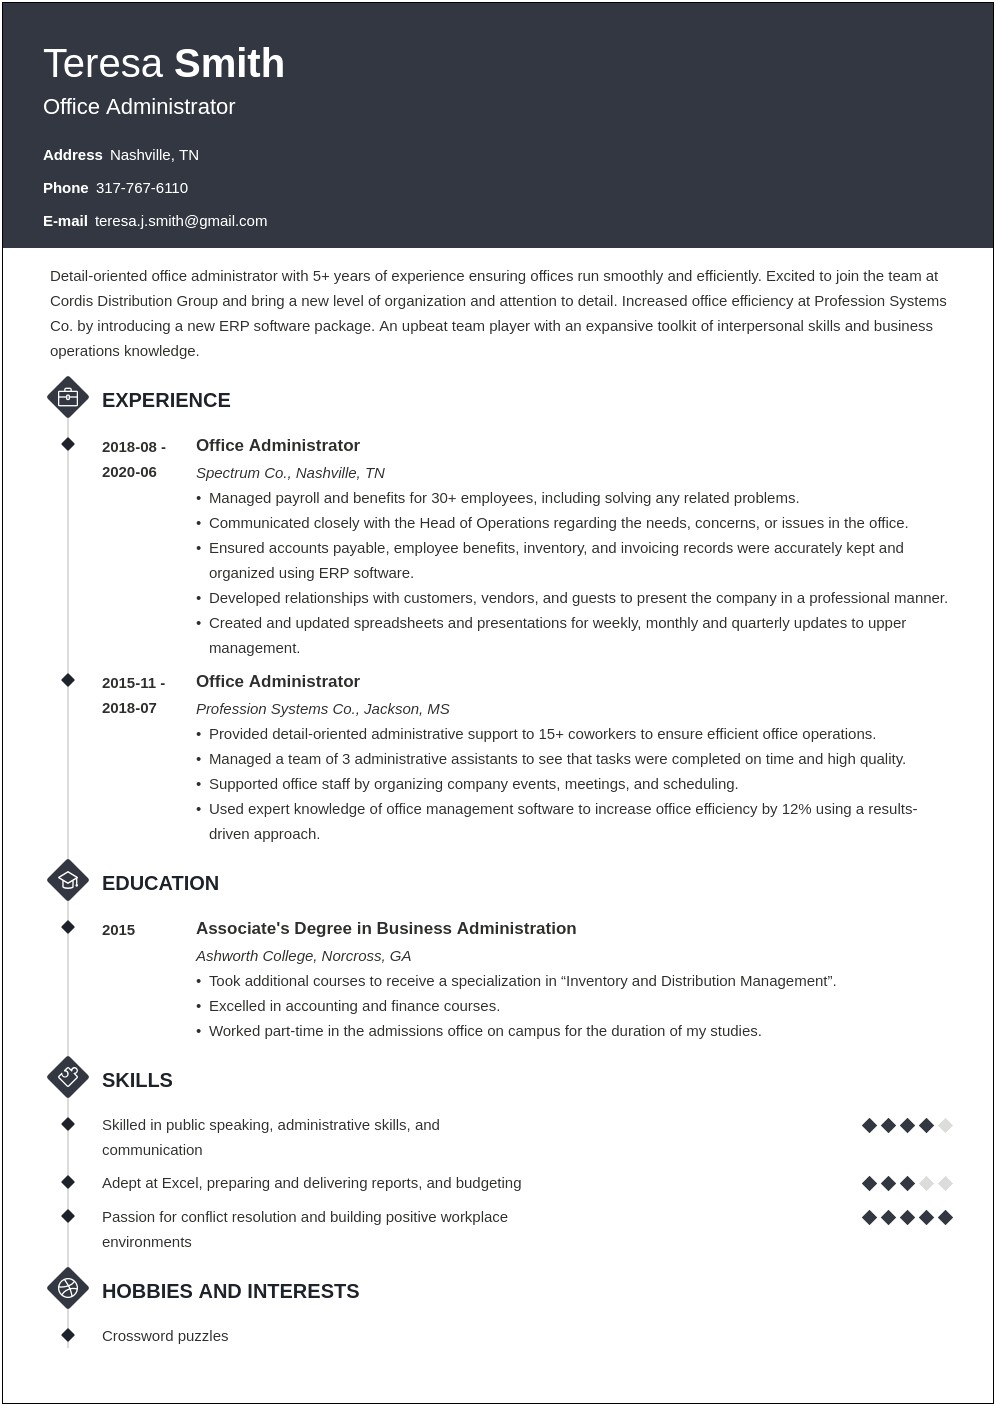 Office Administrators Job Outstanding Description For Resume